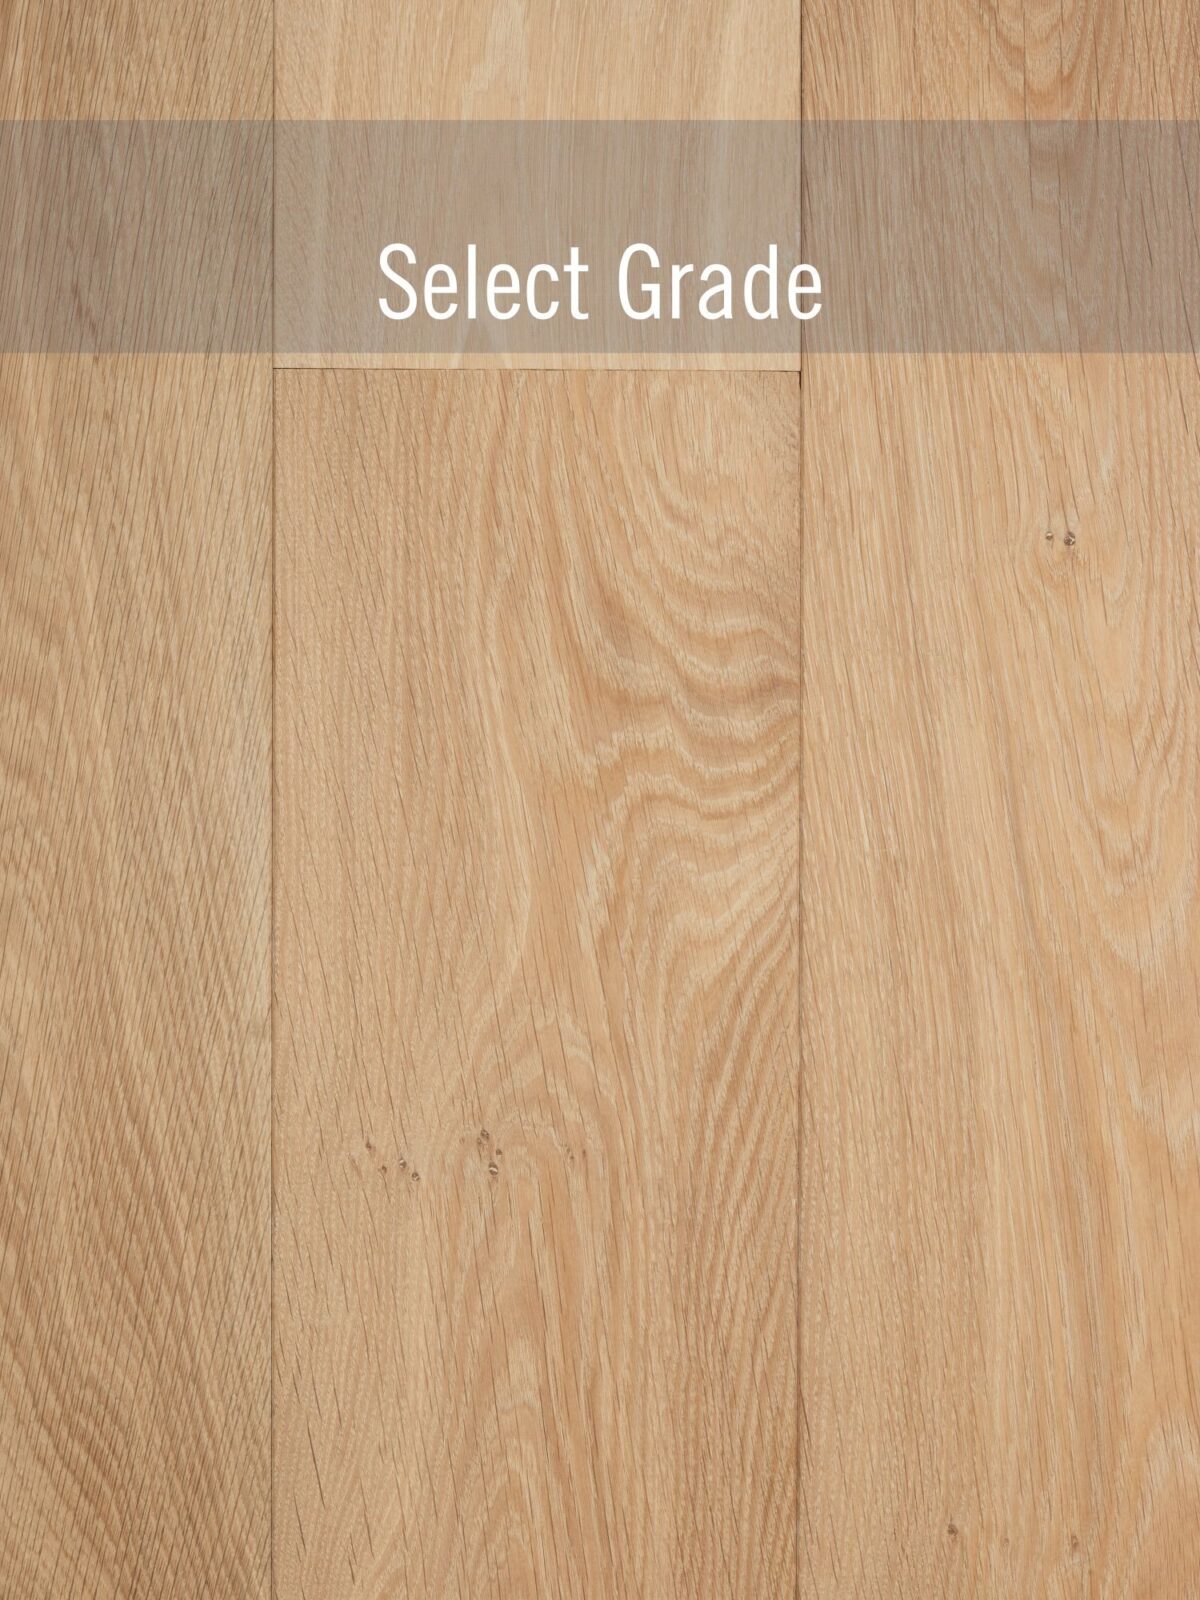 select grade wood flooring